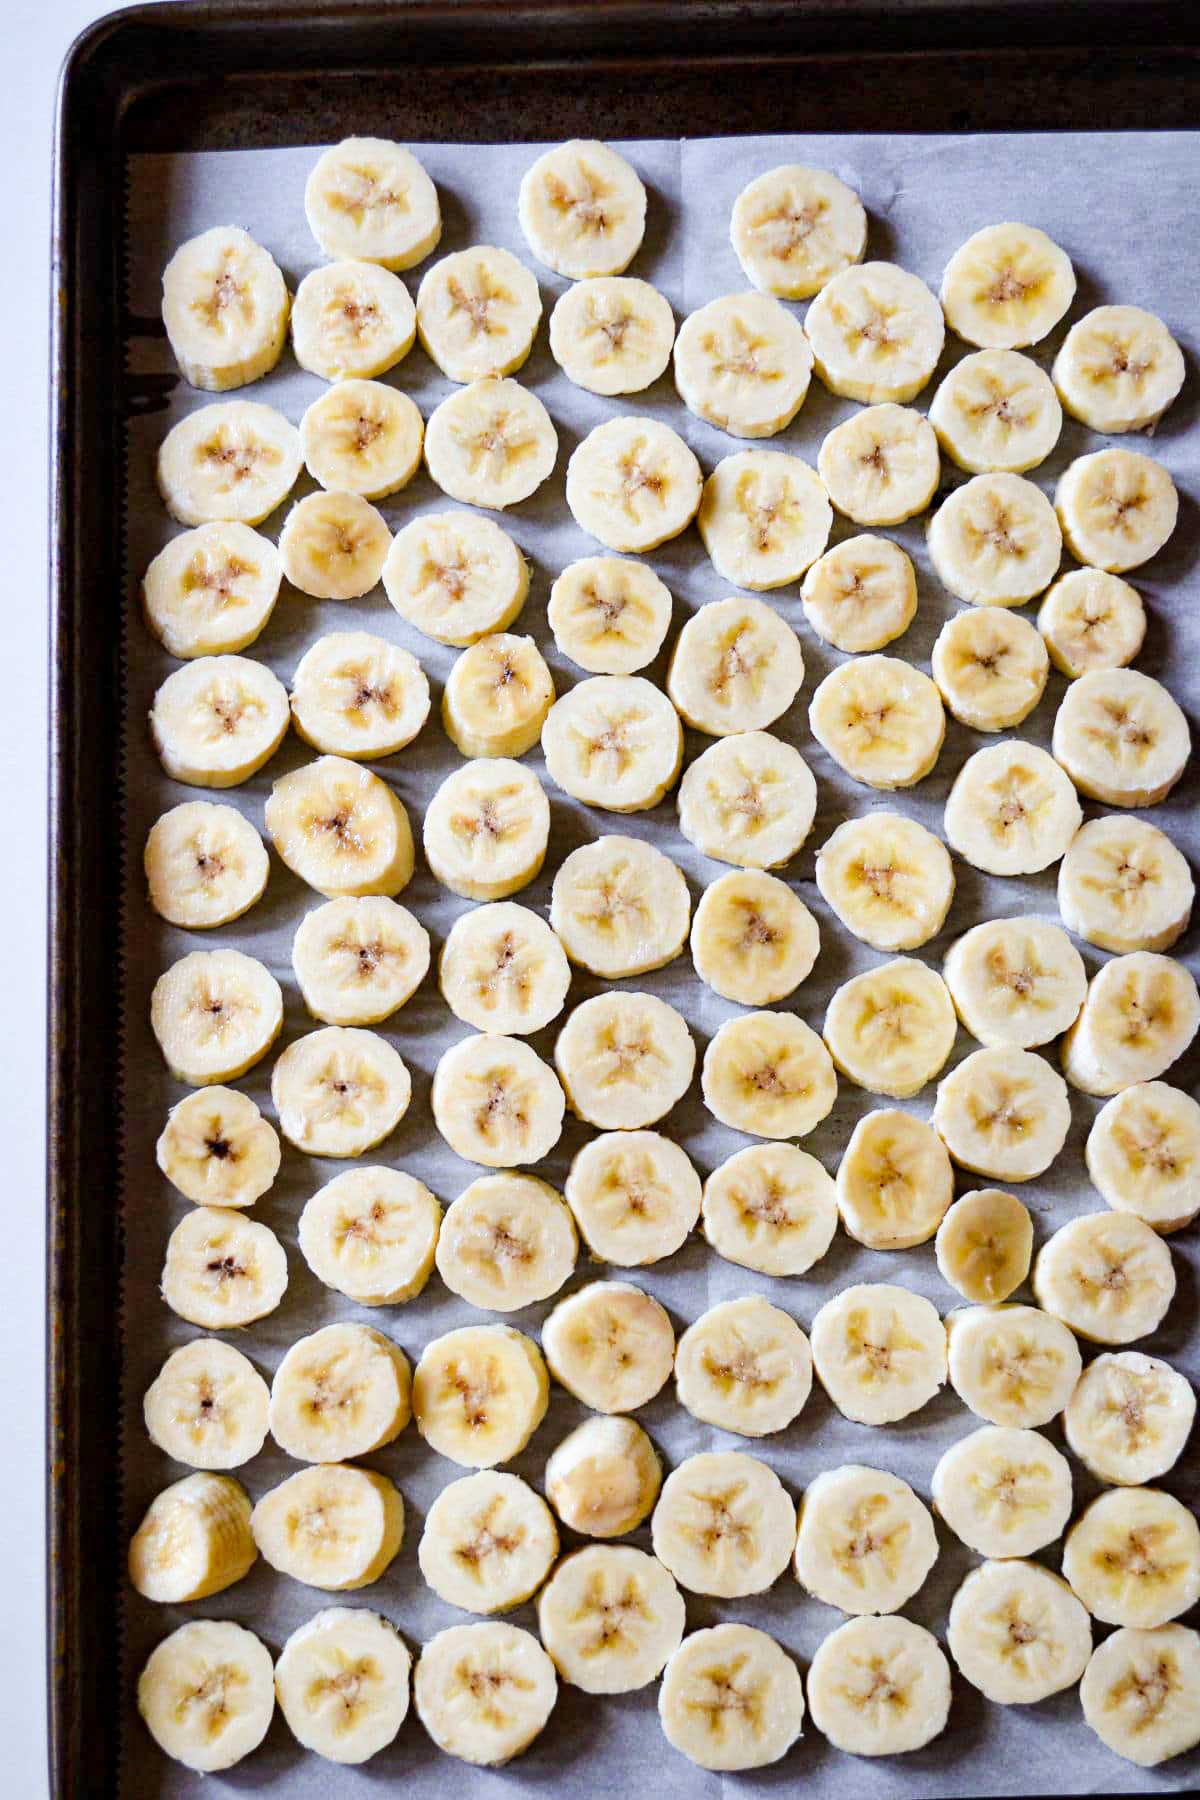 Sliced bananas frozen on a baking tray